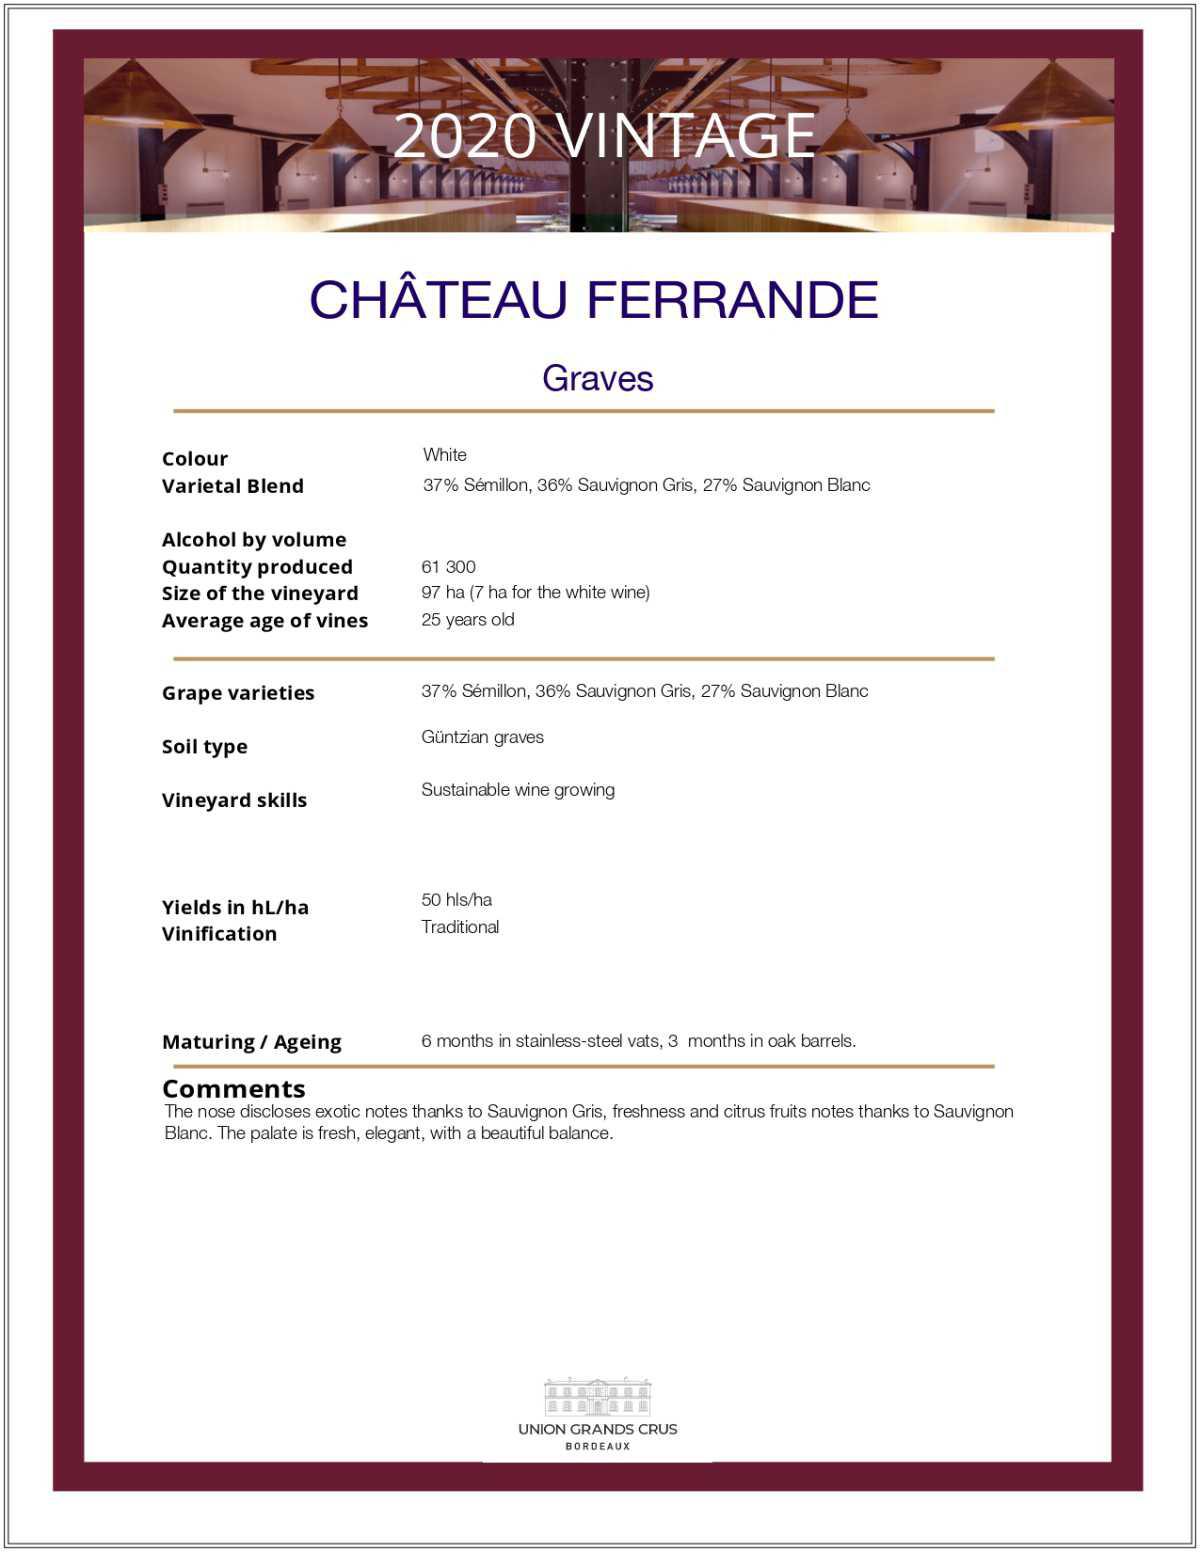 Château Ferrande - White